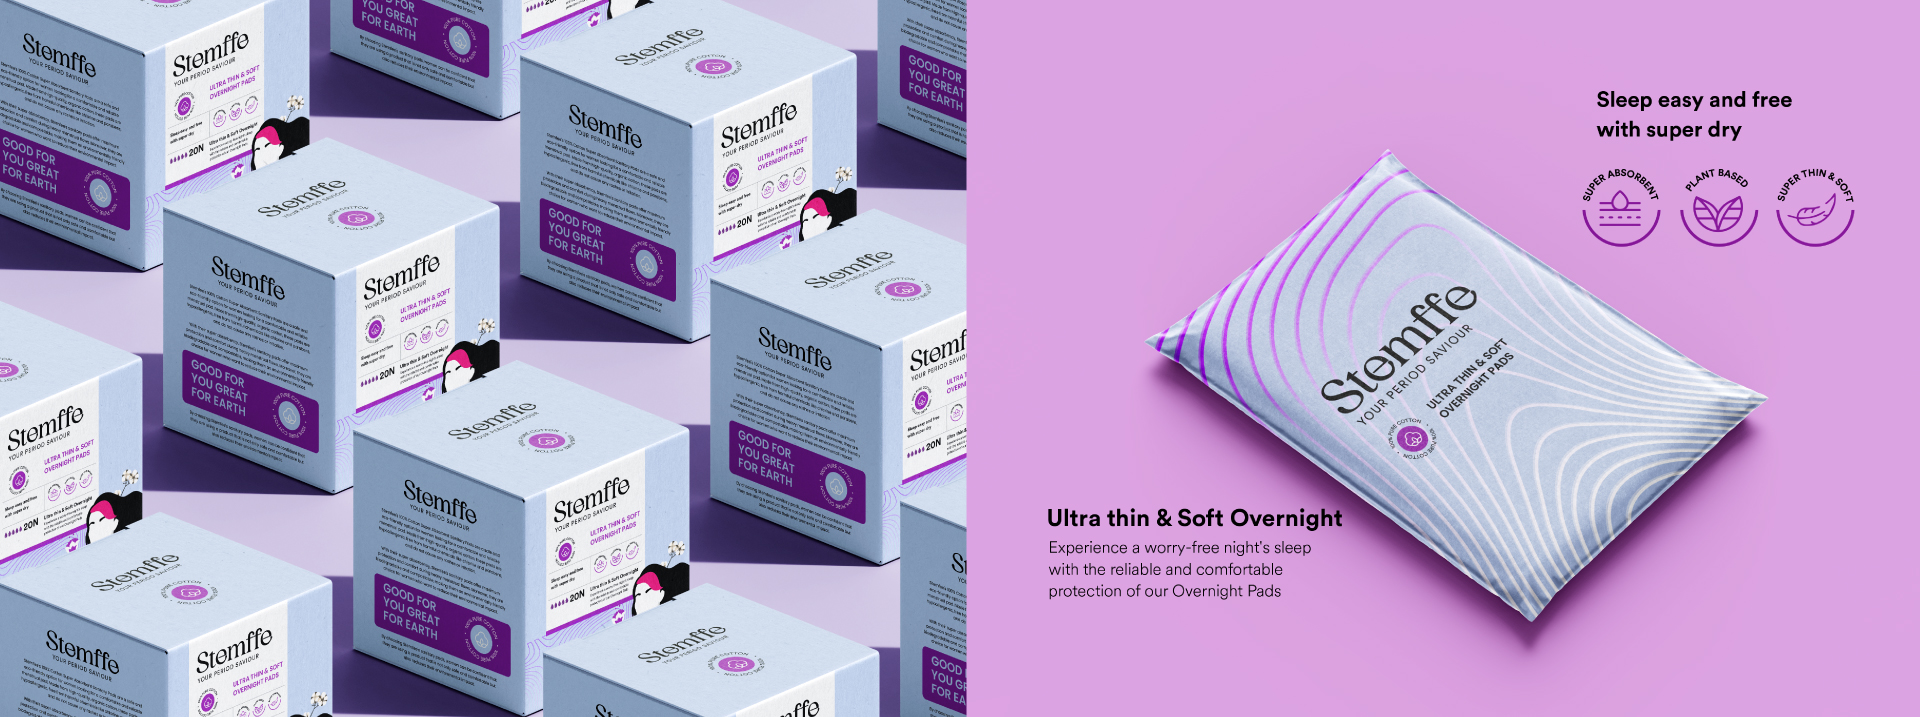 "Stemffe - A feminine hygiene brand, featuring elegant branding and packaging design by Devolv Studio.